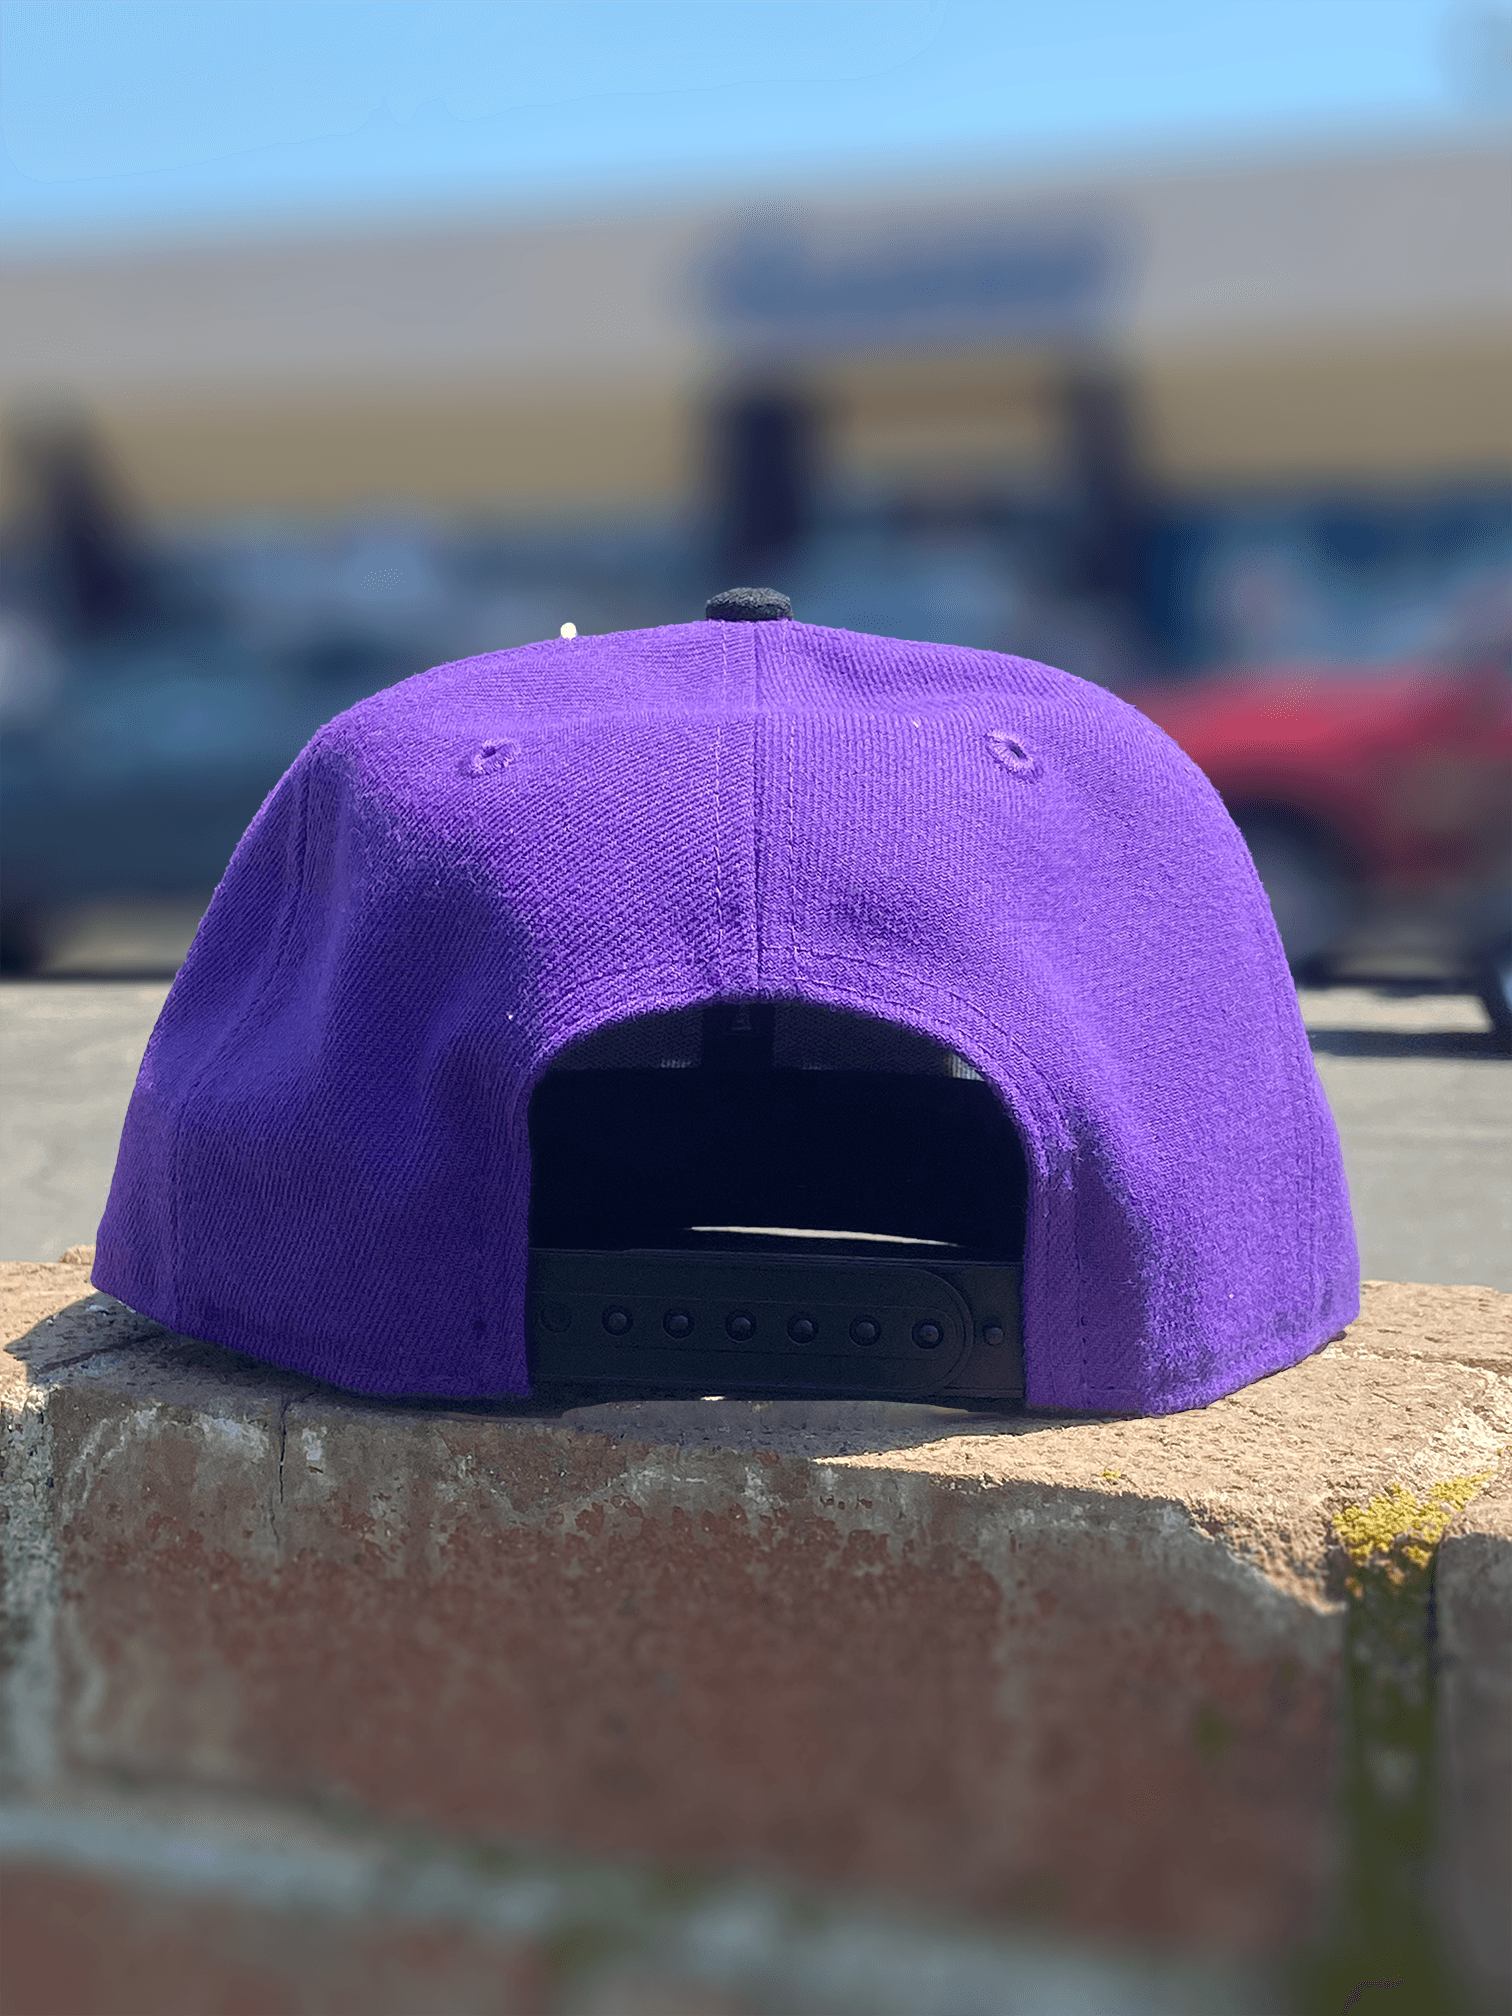 Chicago Cubs - Basic 9FIFTY Snapback Hat, New Era